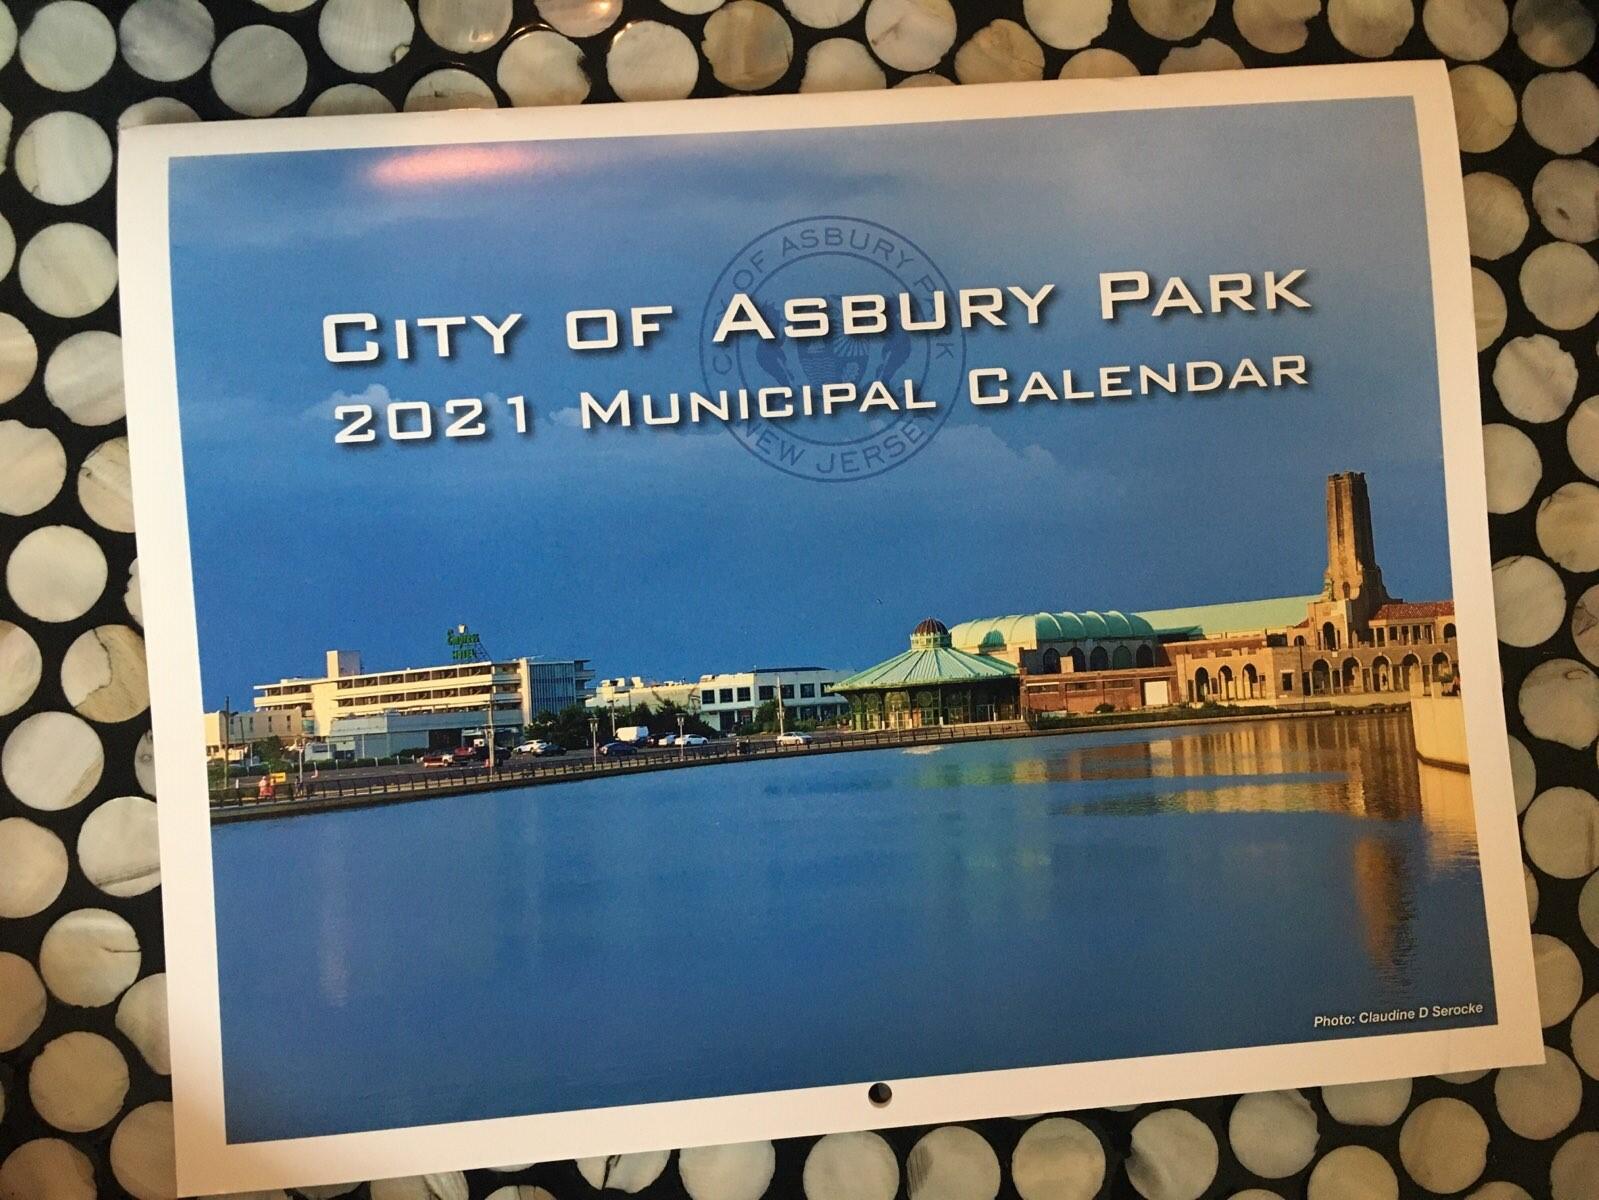 City of Asbury Park 2021 Municipal Calendar (City of Asbury Park